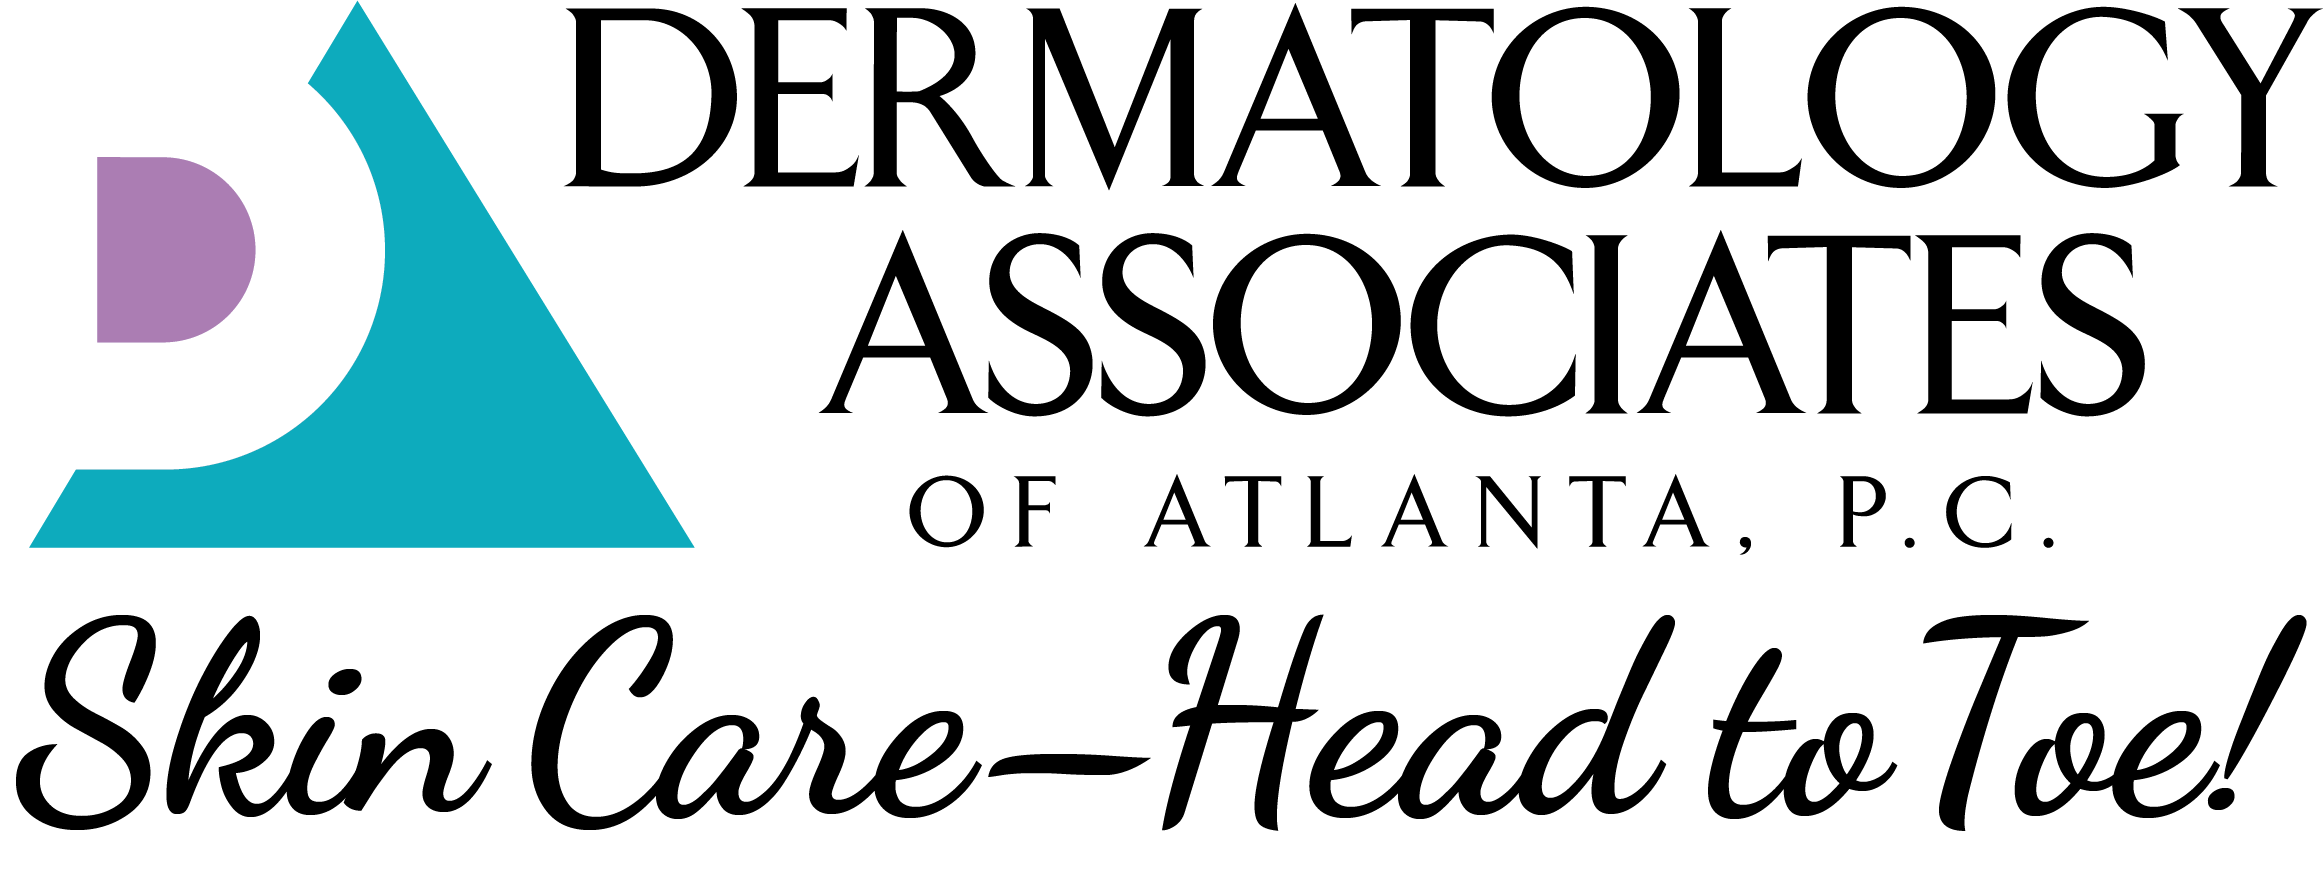 DAA logo_BLUE-TEAL WITH TAG-1